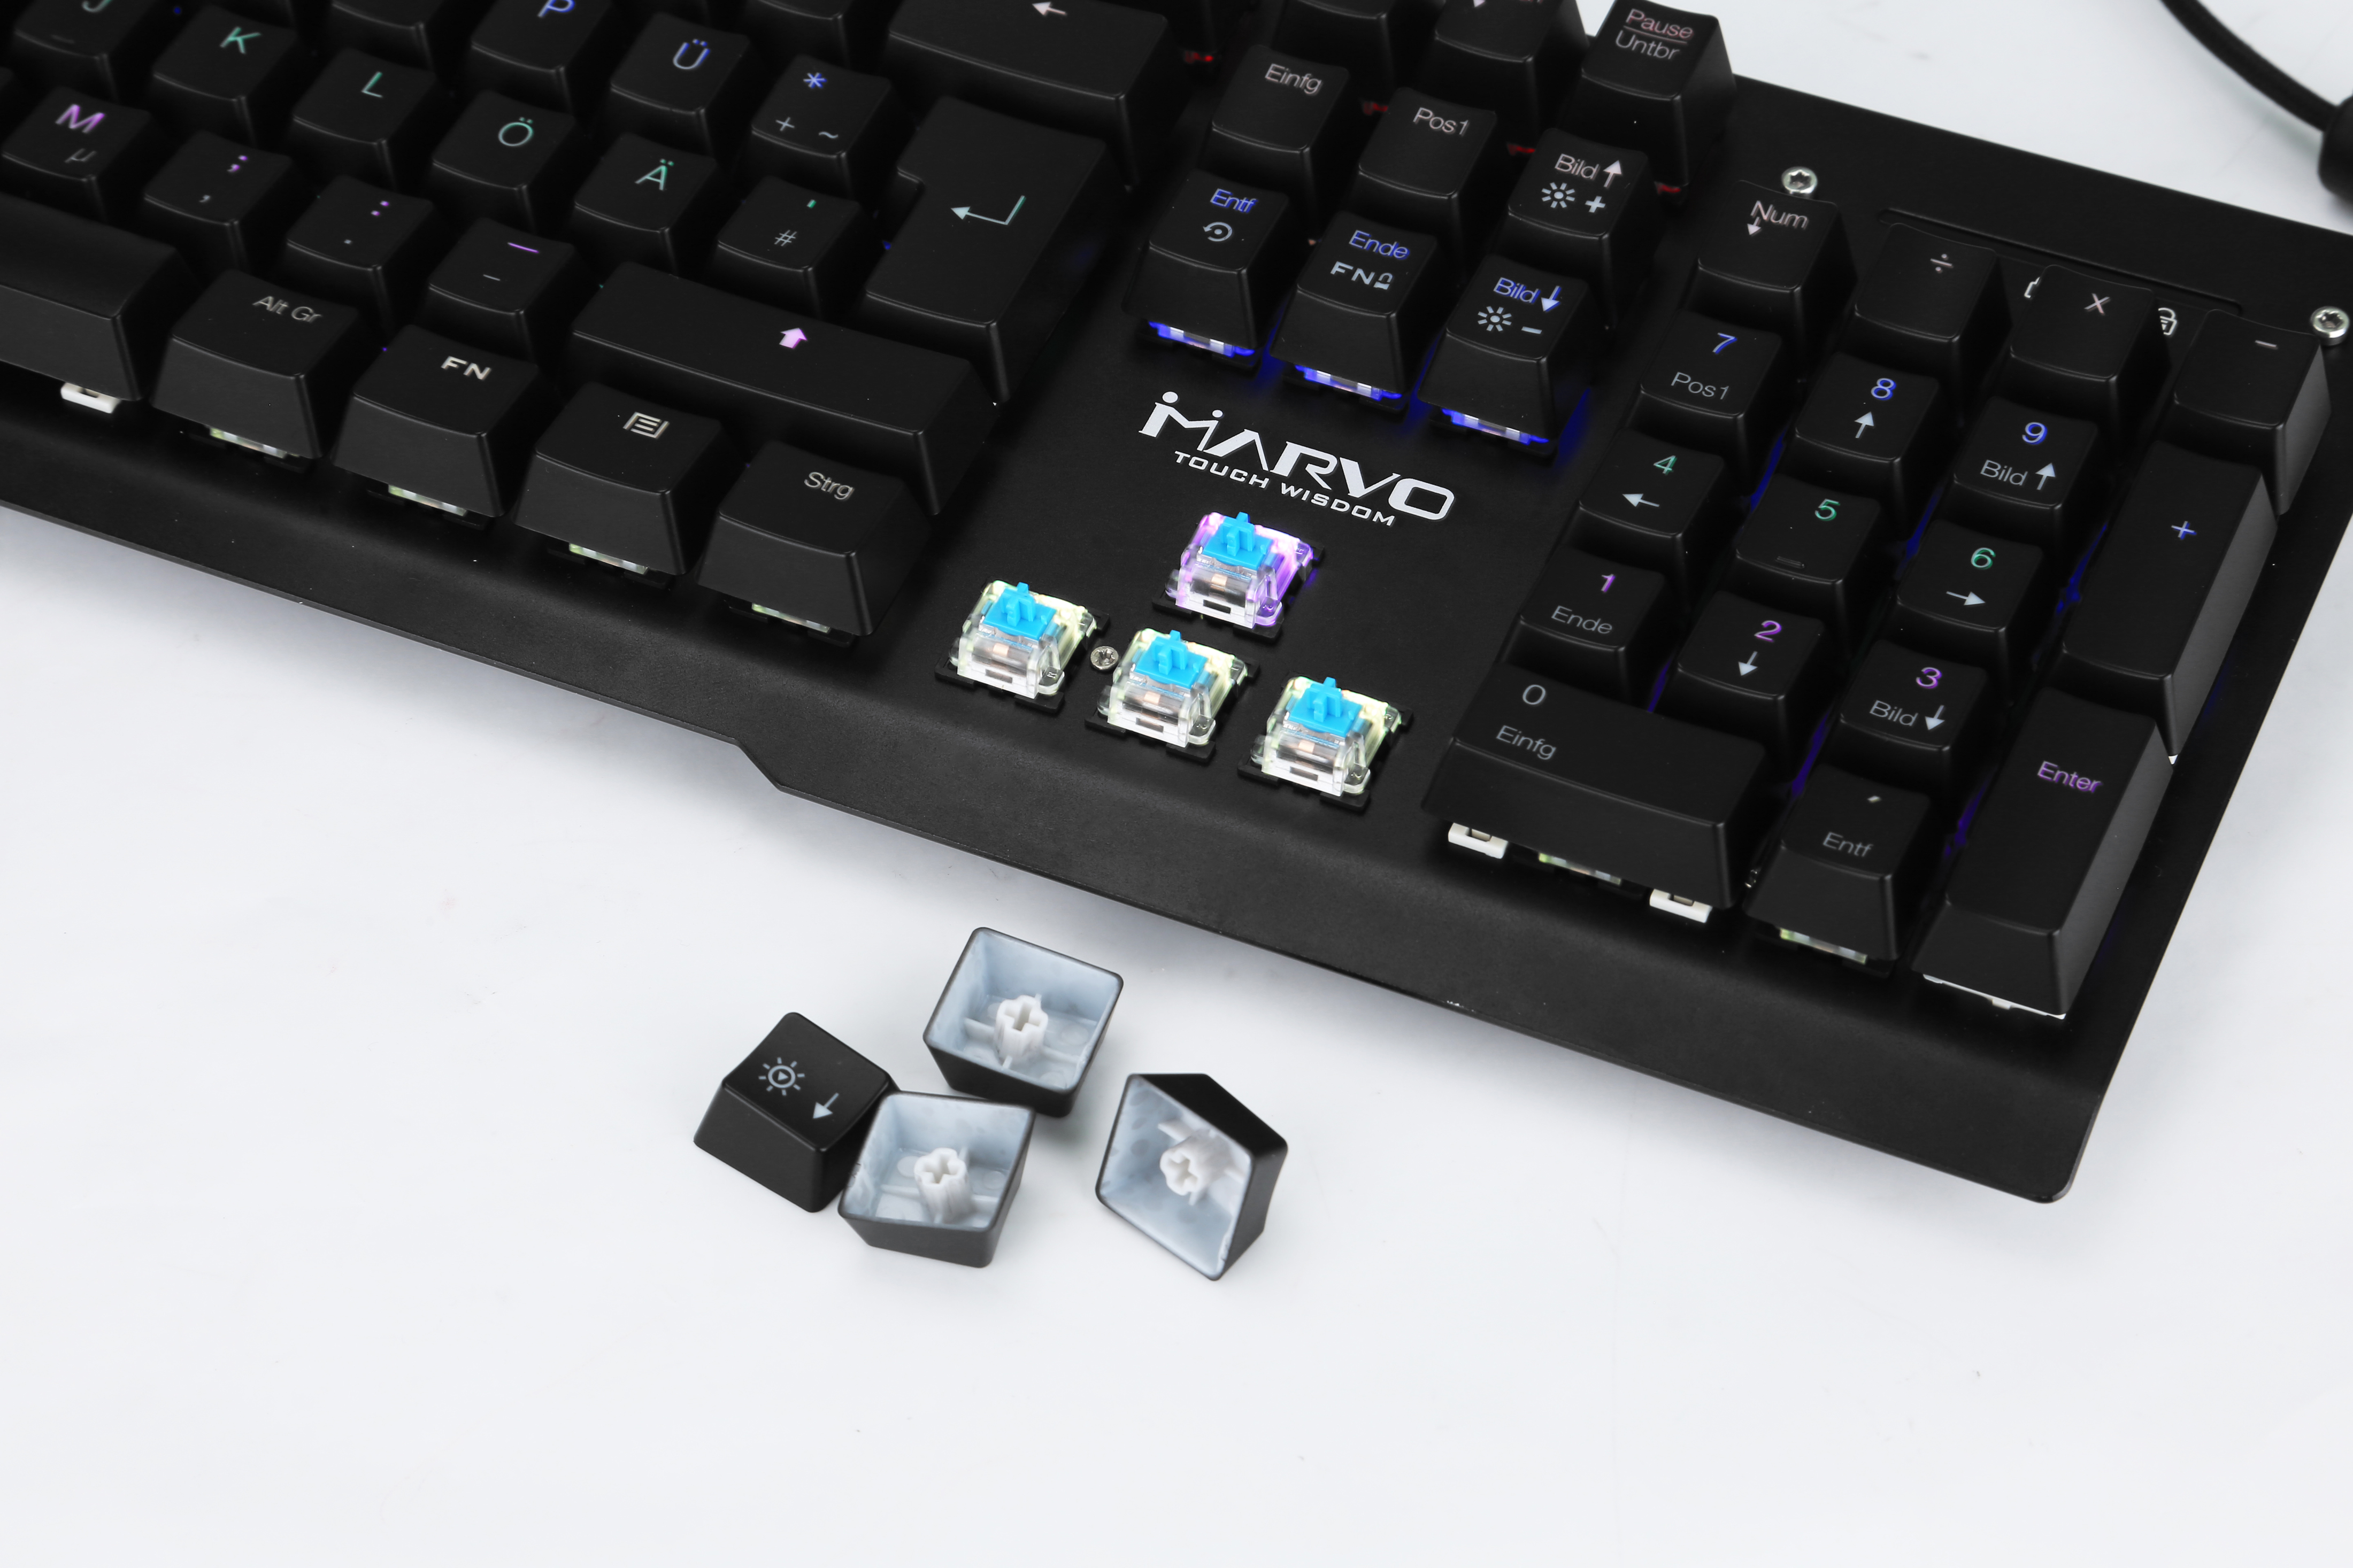 MARVO KG943G, Gaming MX Mechanisch, Blue Tastatur, Cherry